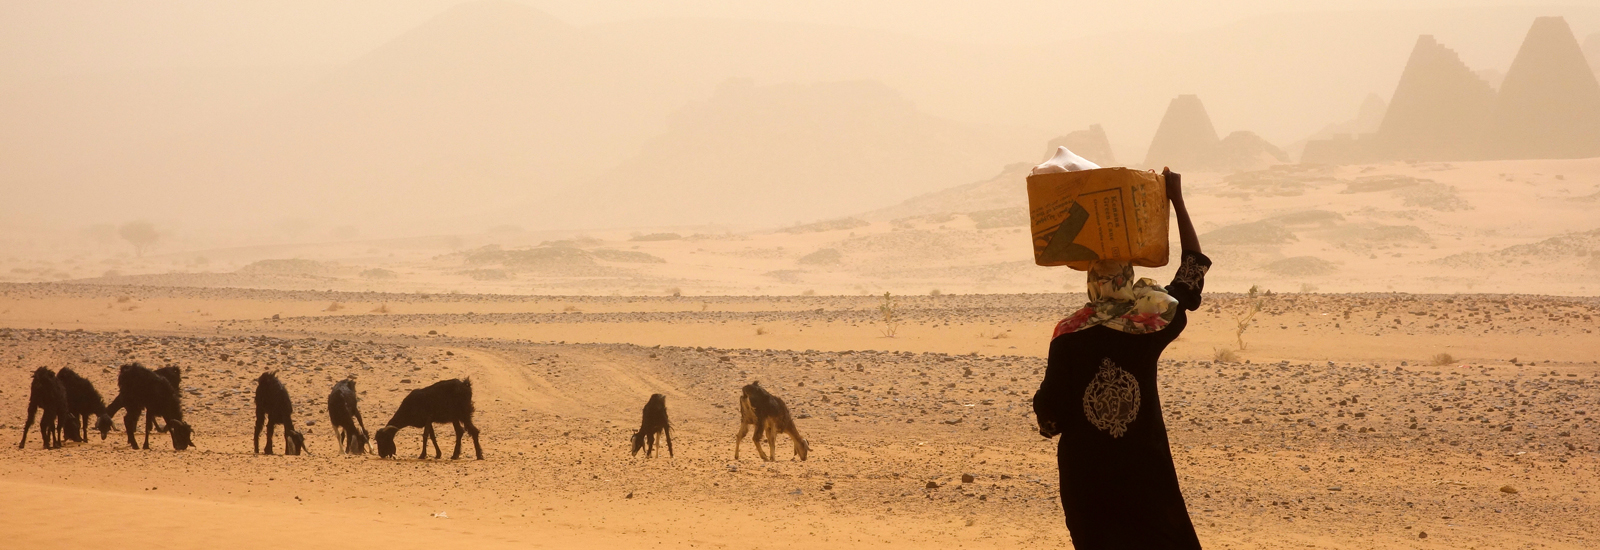 Lady in a sandstorm in Sudan